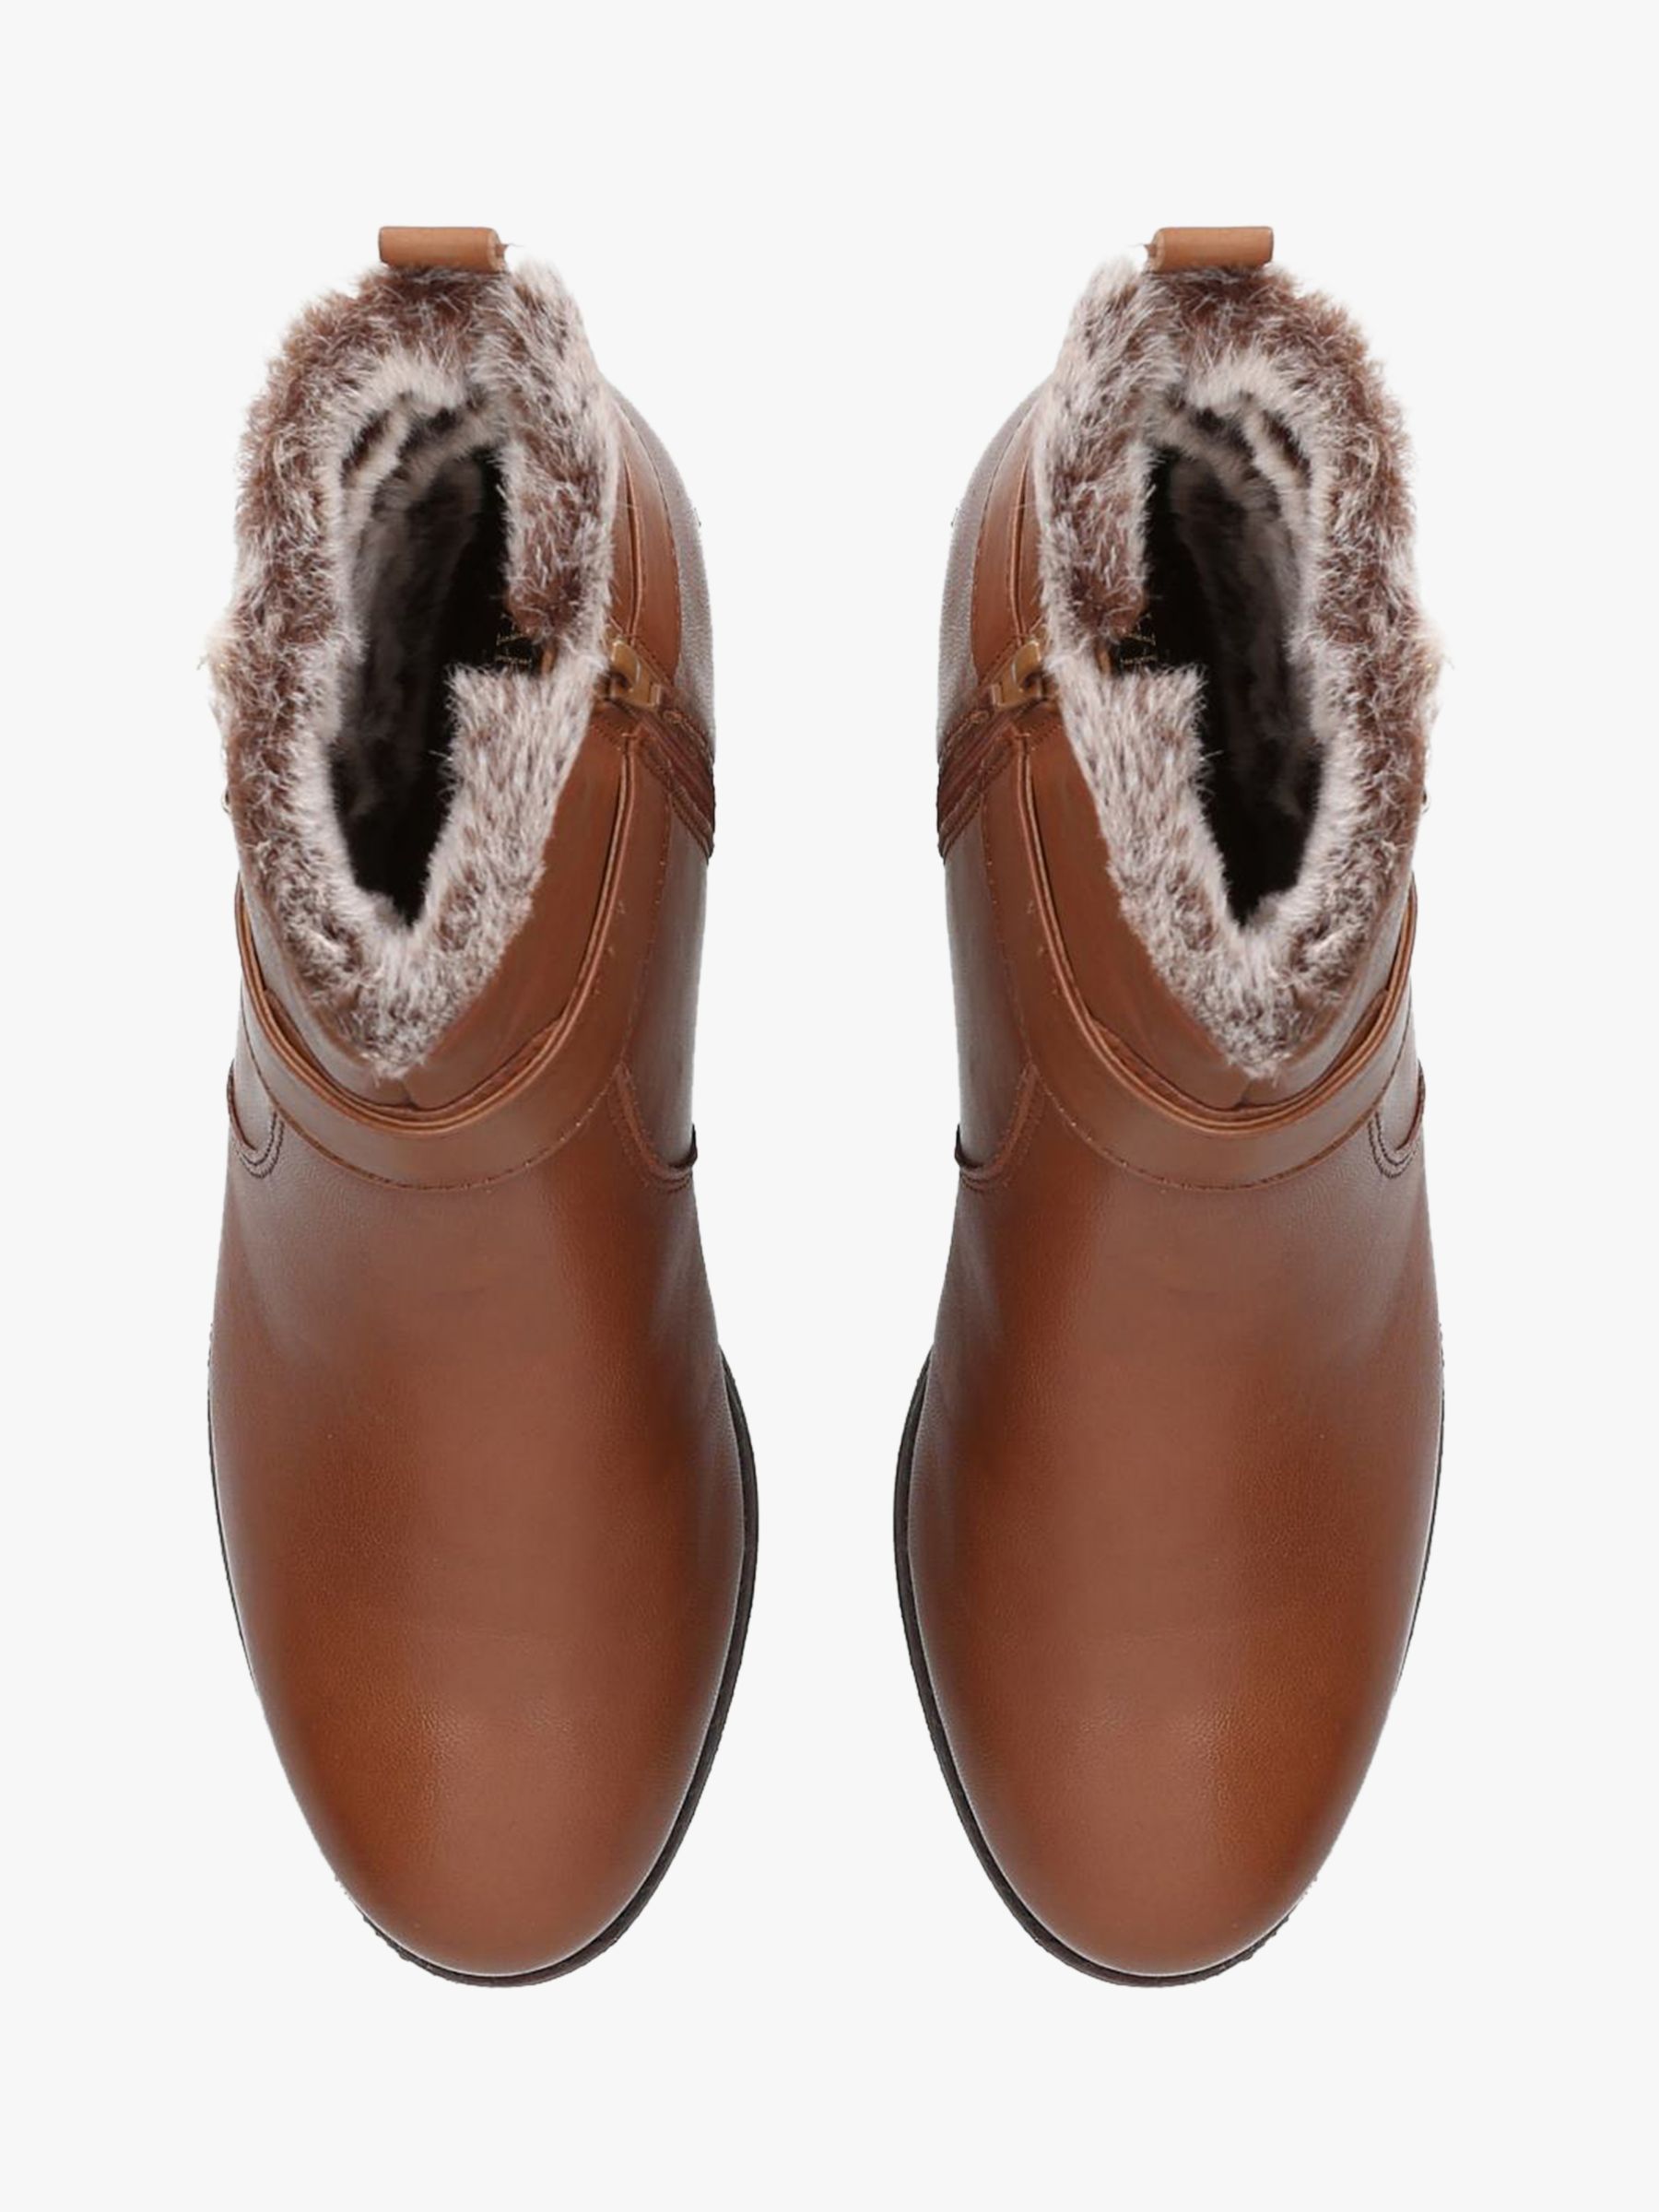 carvela fur boots